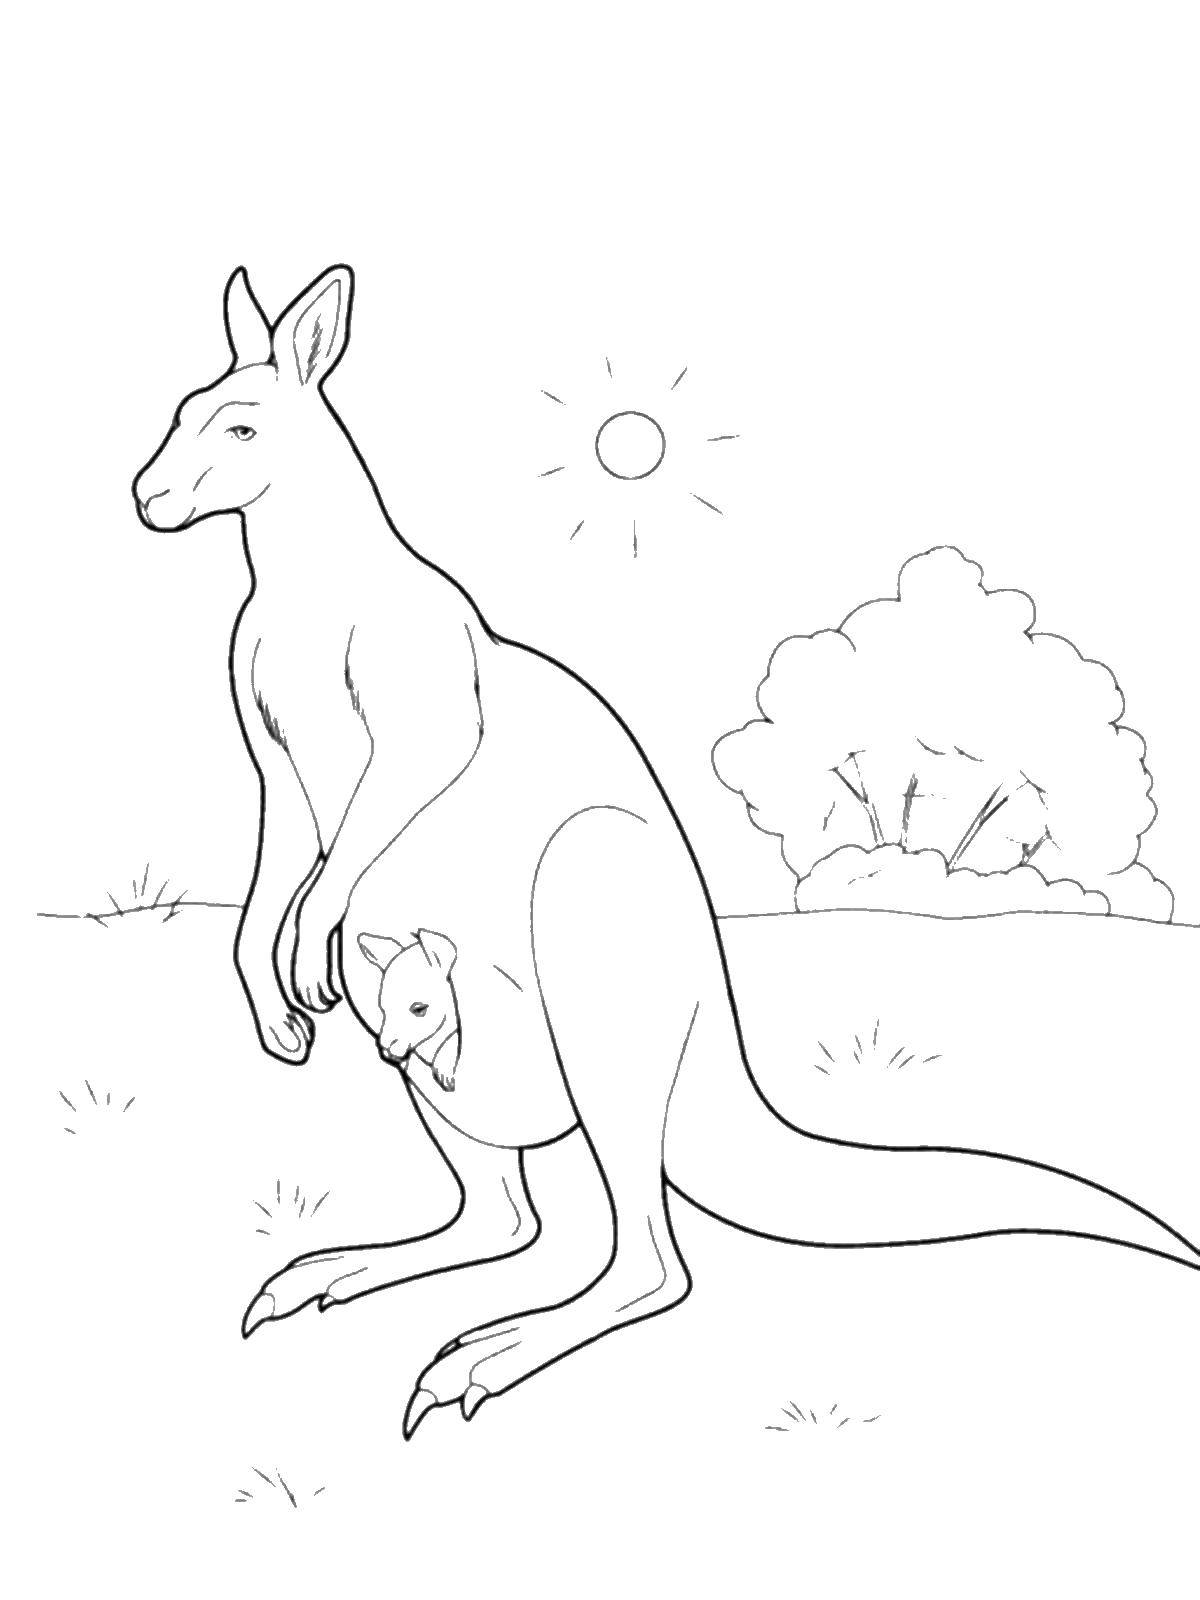 Coloring Kangaroo. Category wild animals. Tags:  kangaroo.